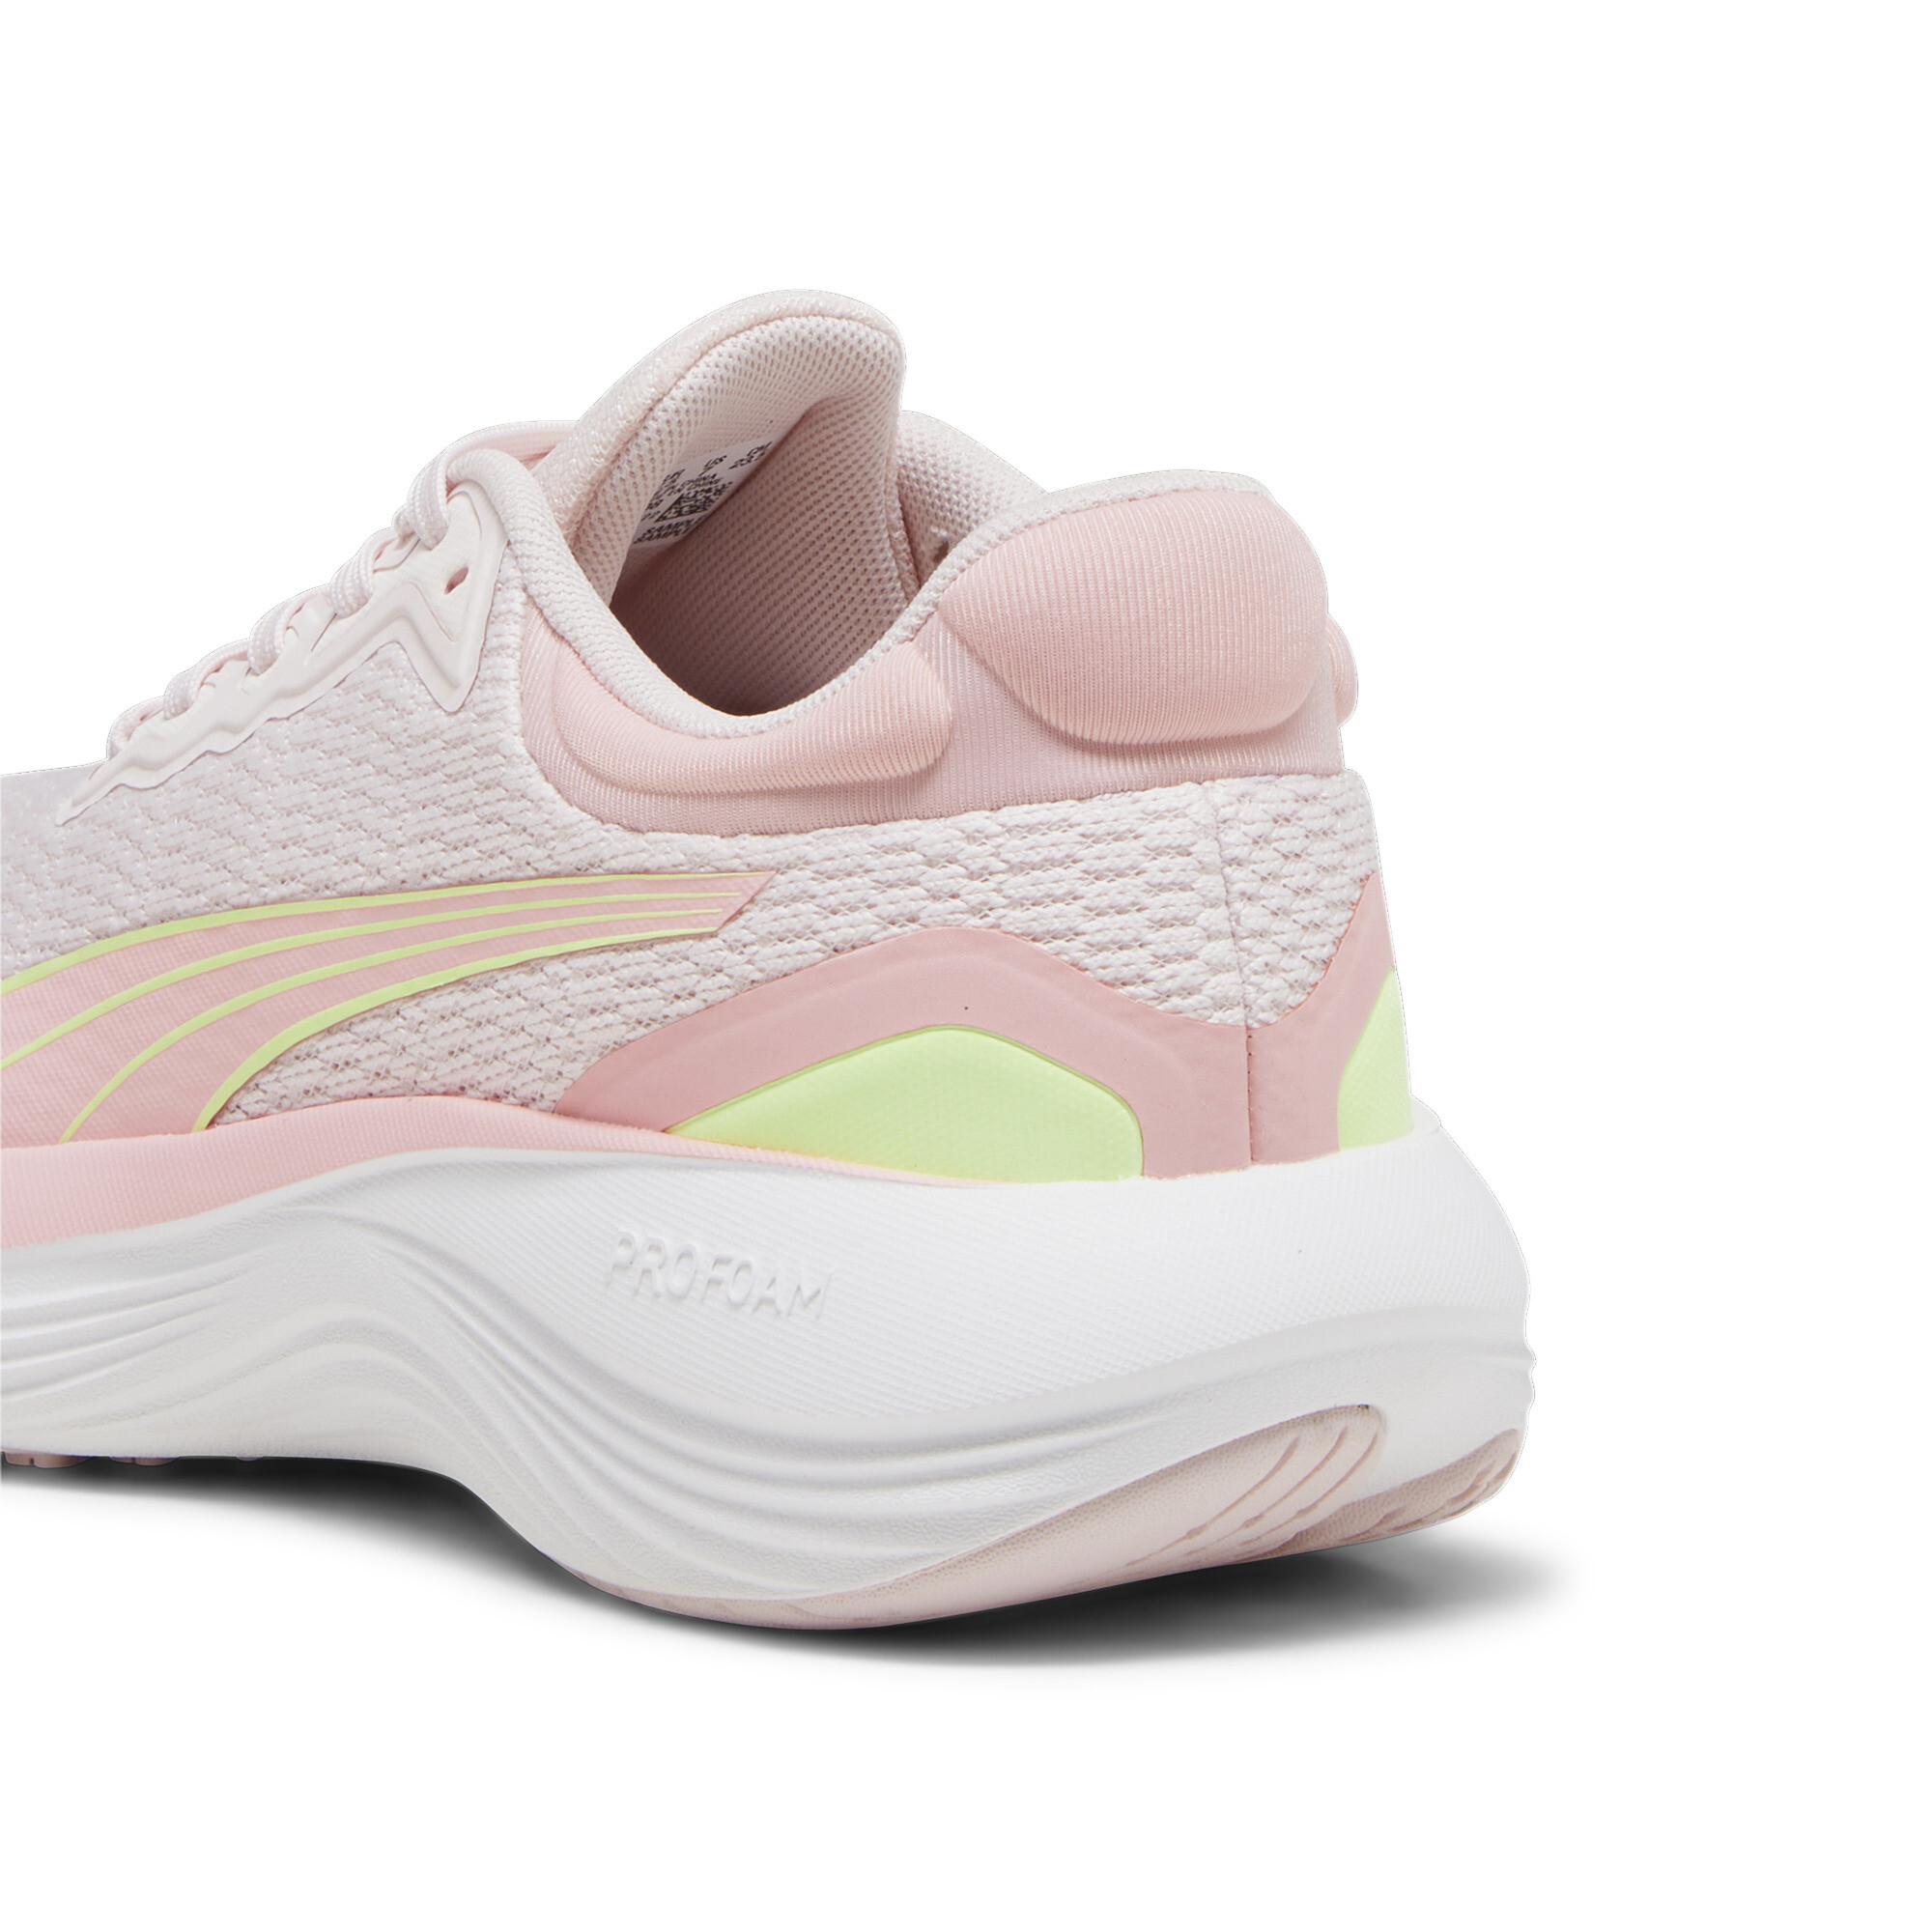 Men's PUMA Scend Pro Running Shoes In Pink, Size EU 45